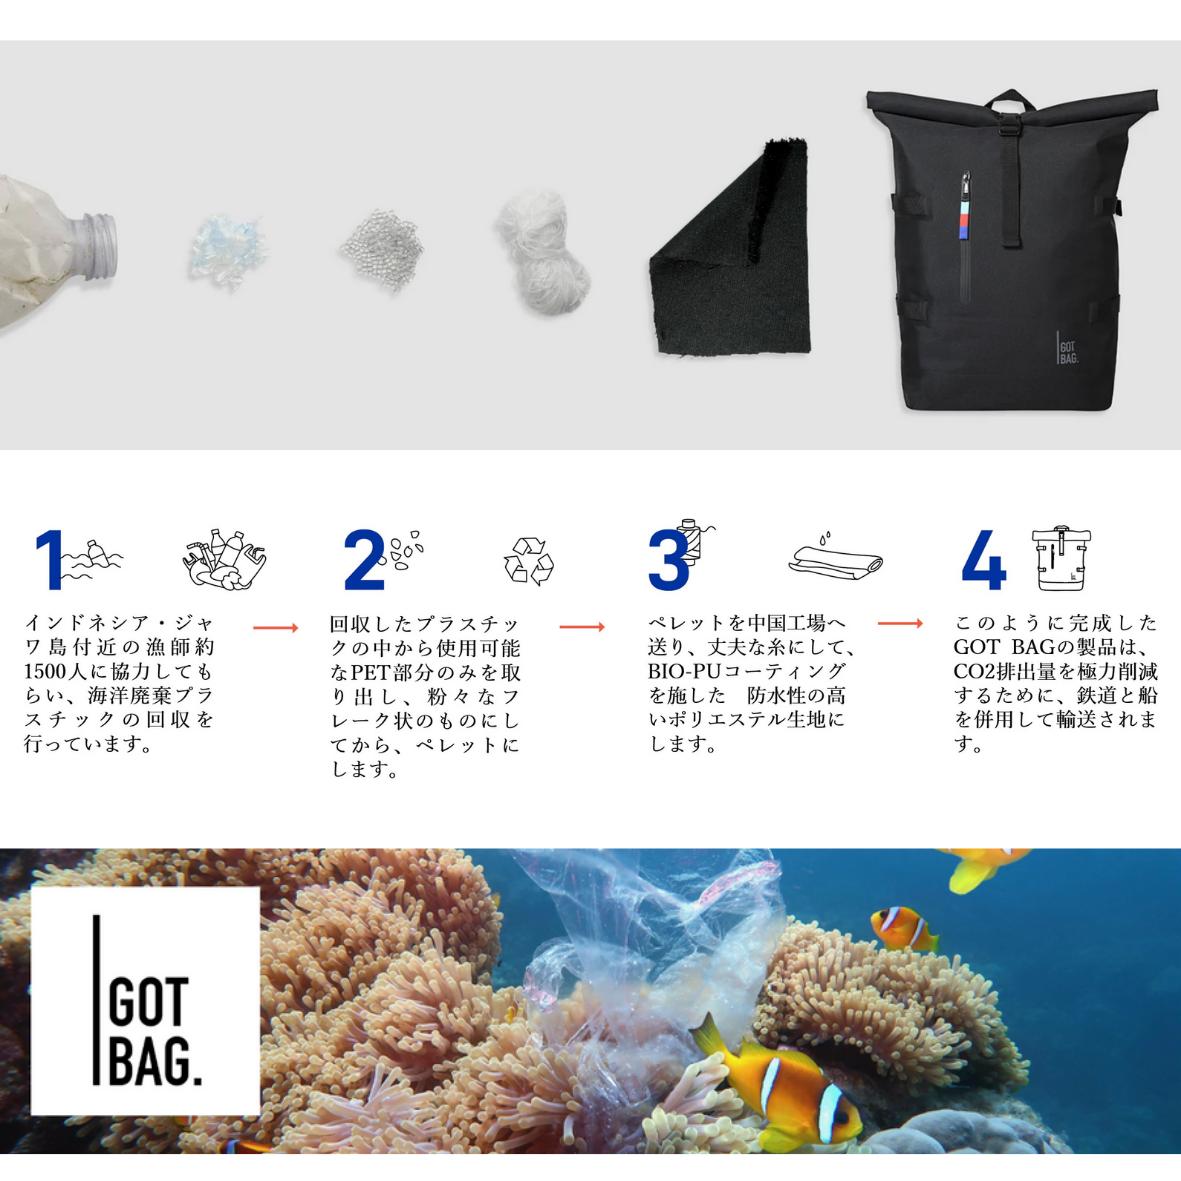 【 GOTBG 】 ”海洋 プラスティック からできた” デイパック